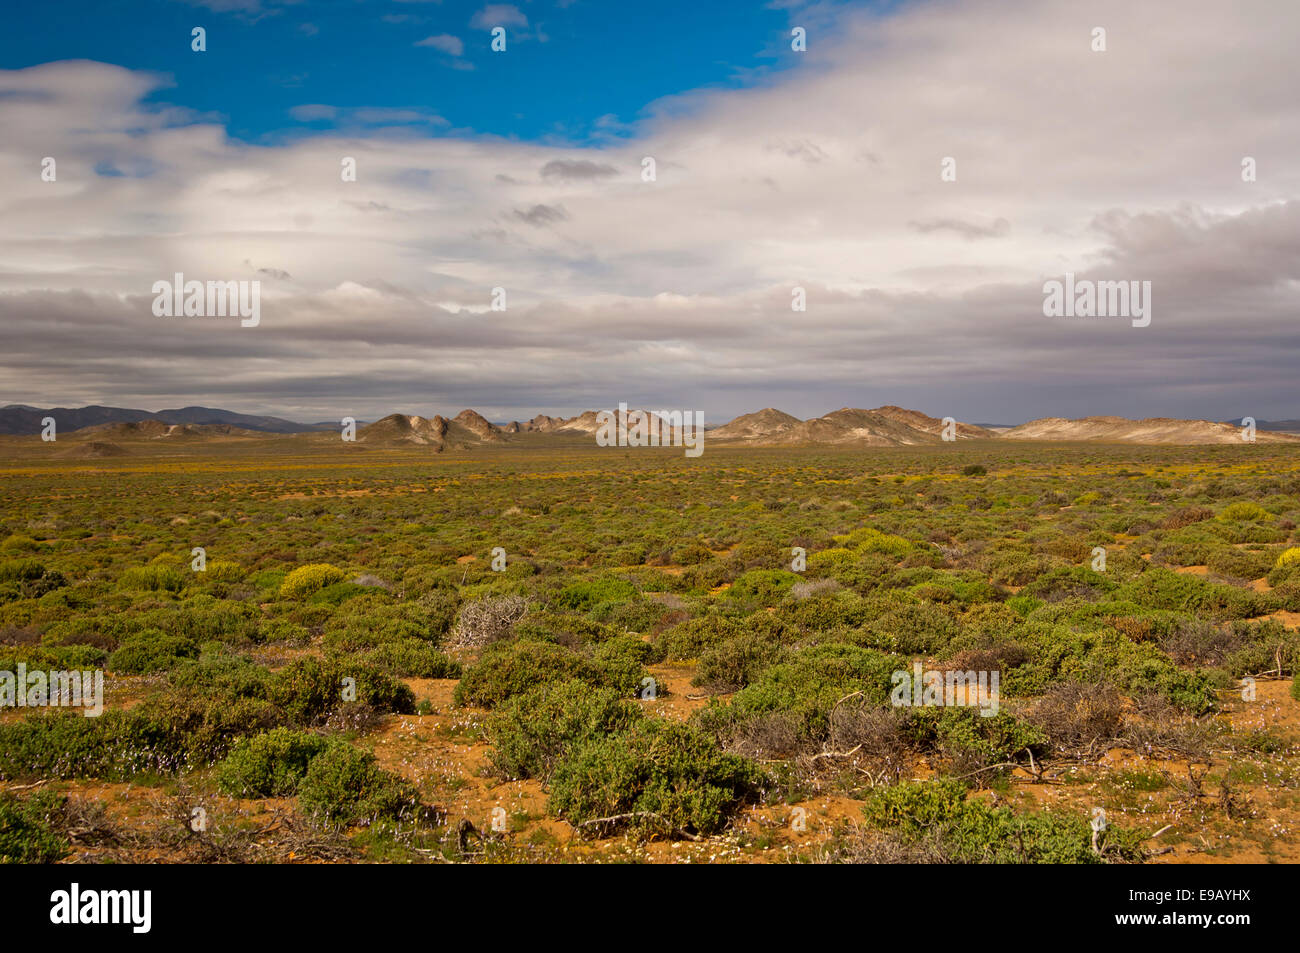 Nama Karoo low-shrub vegetation area, Richtersveld, Northern Cape Province, South Africa Stock Photo